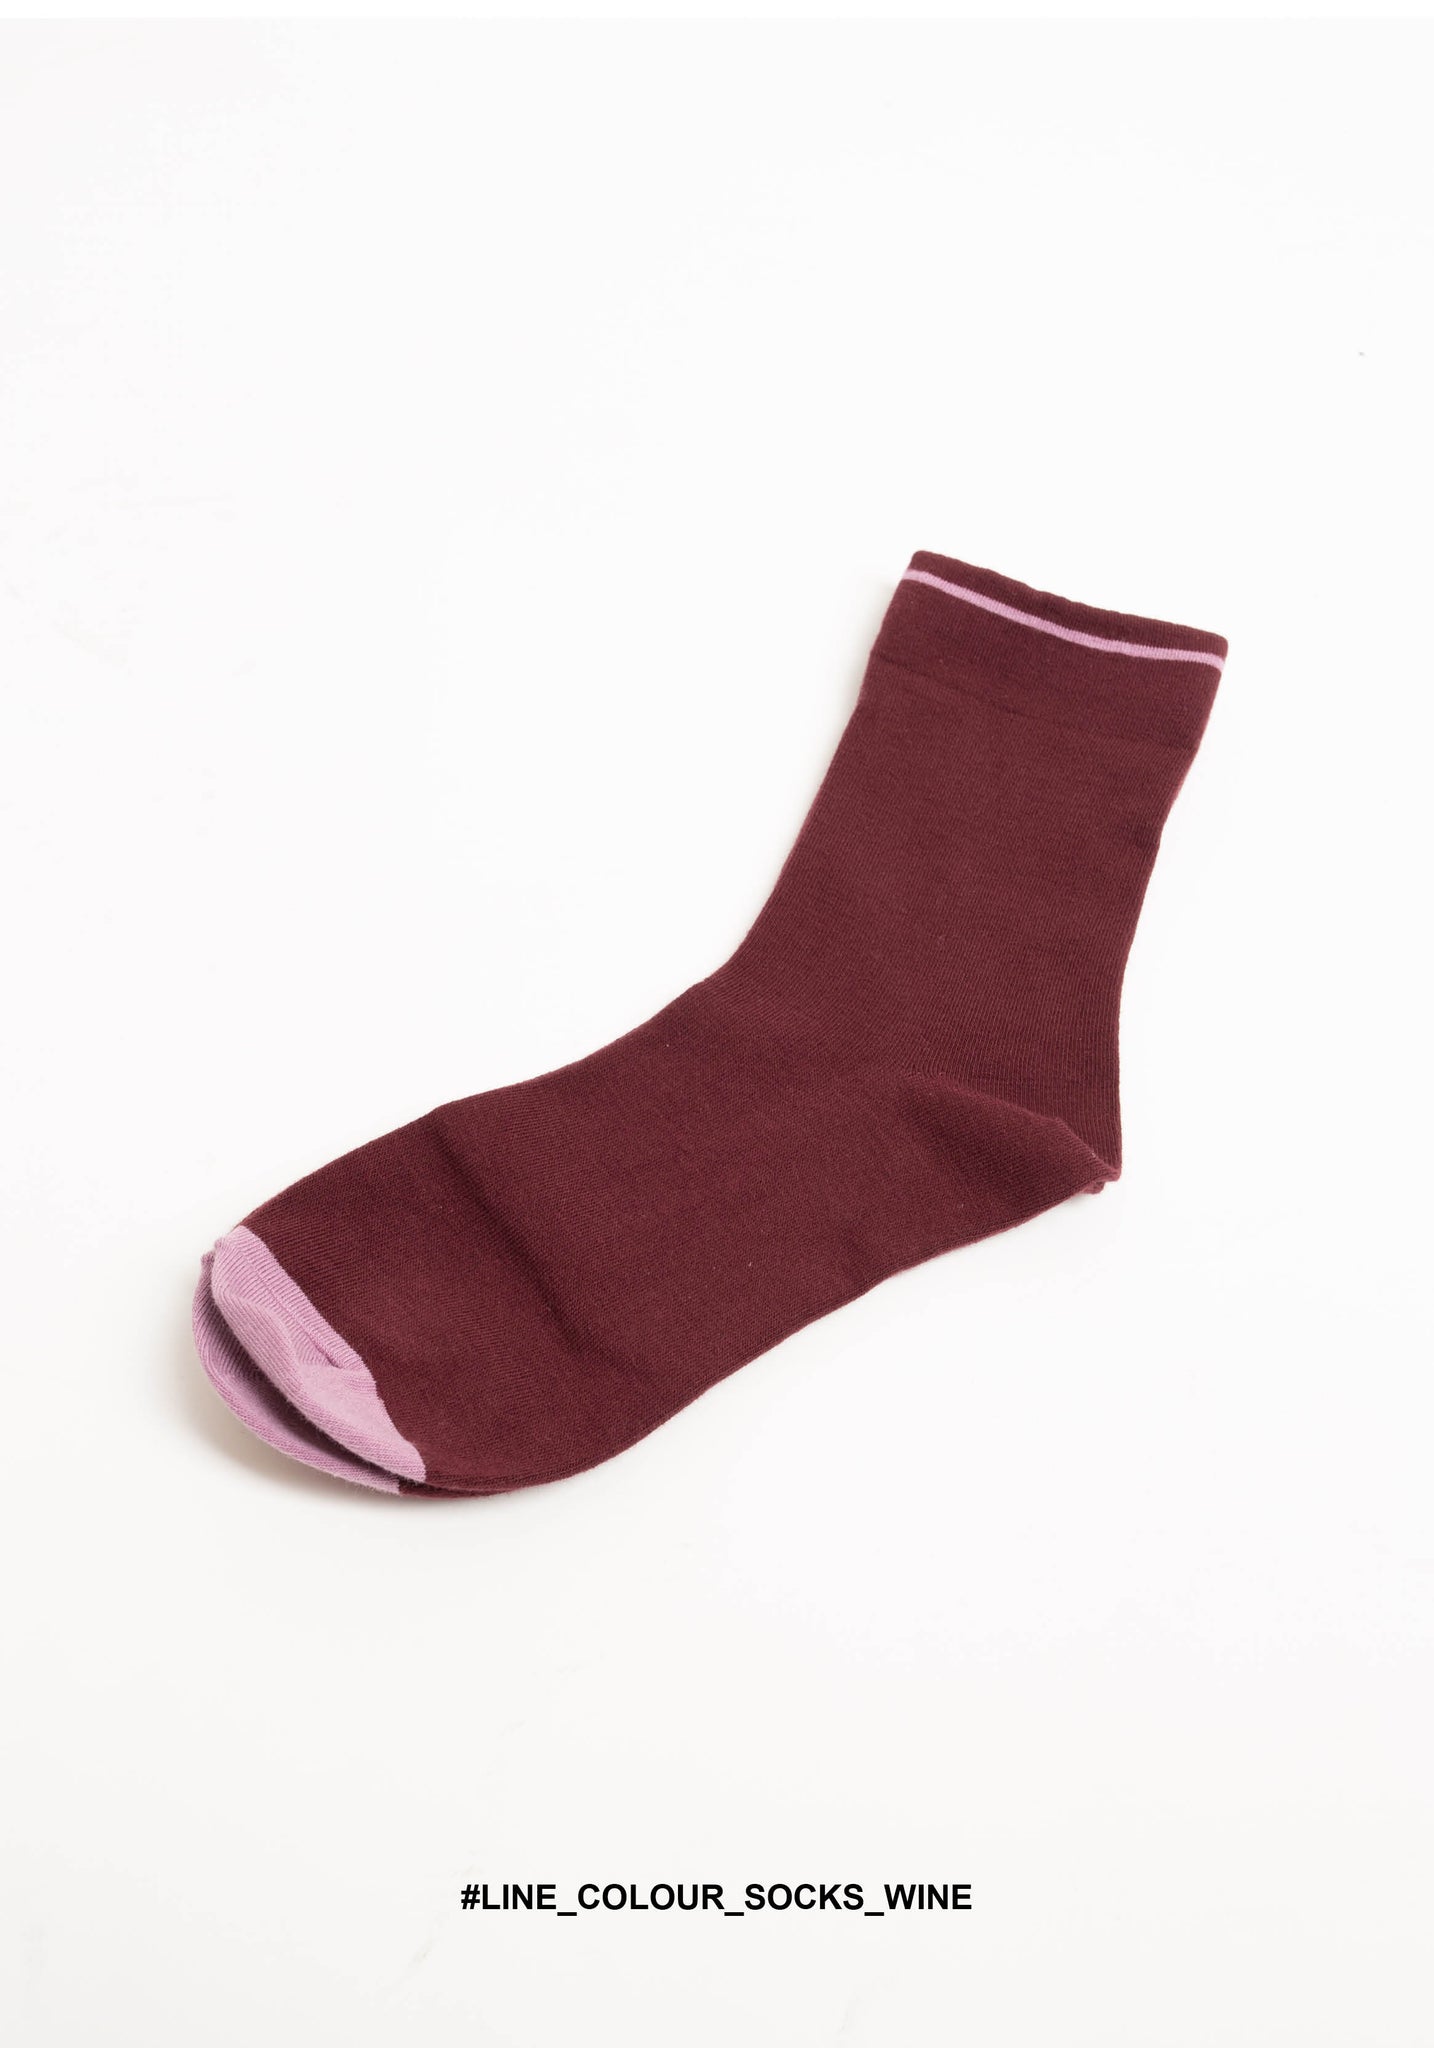 Line Colour Socks Wine - whoami